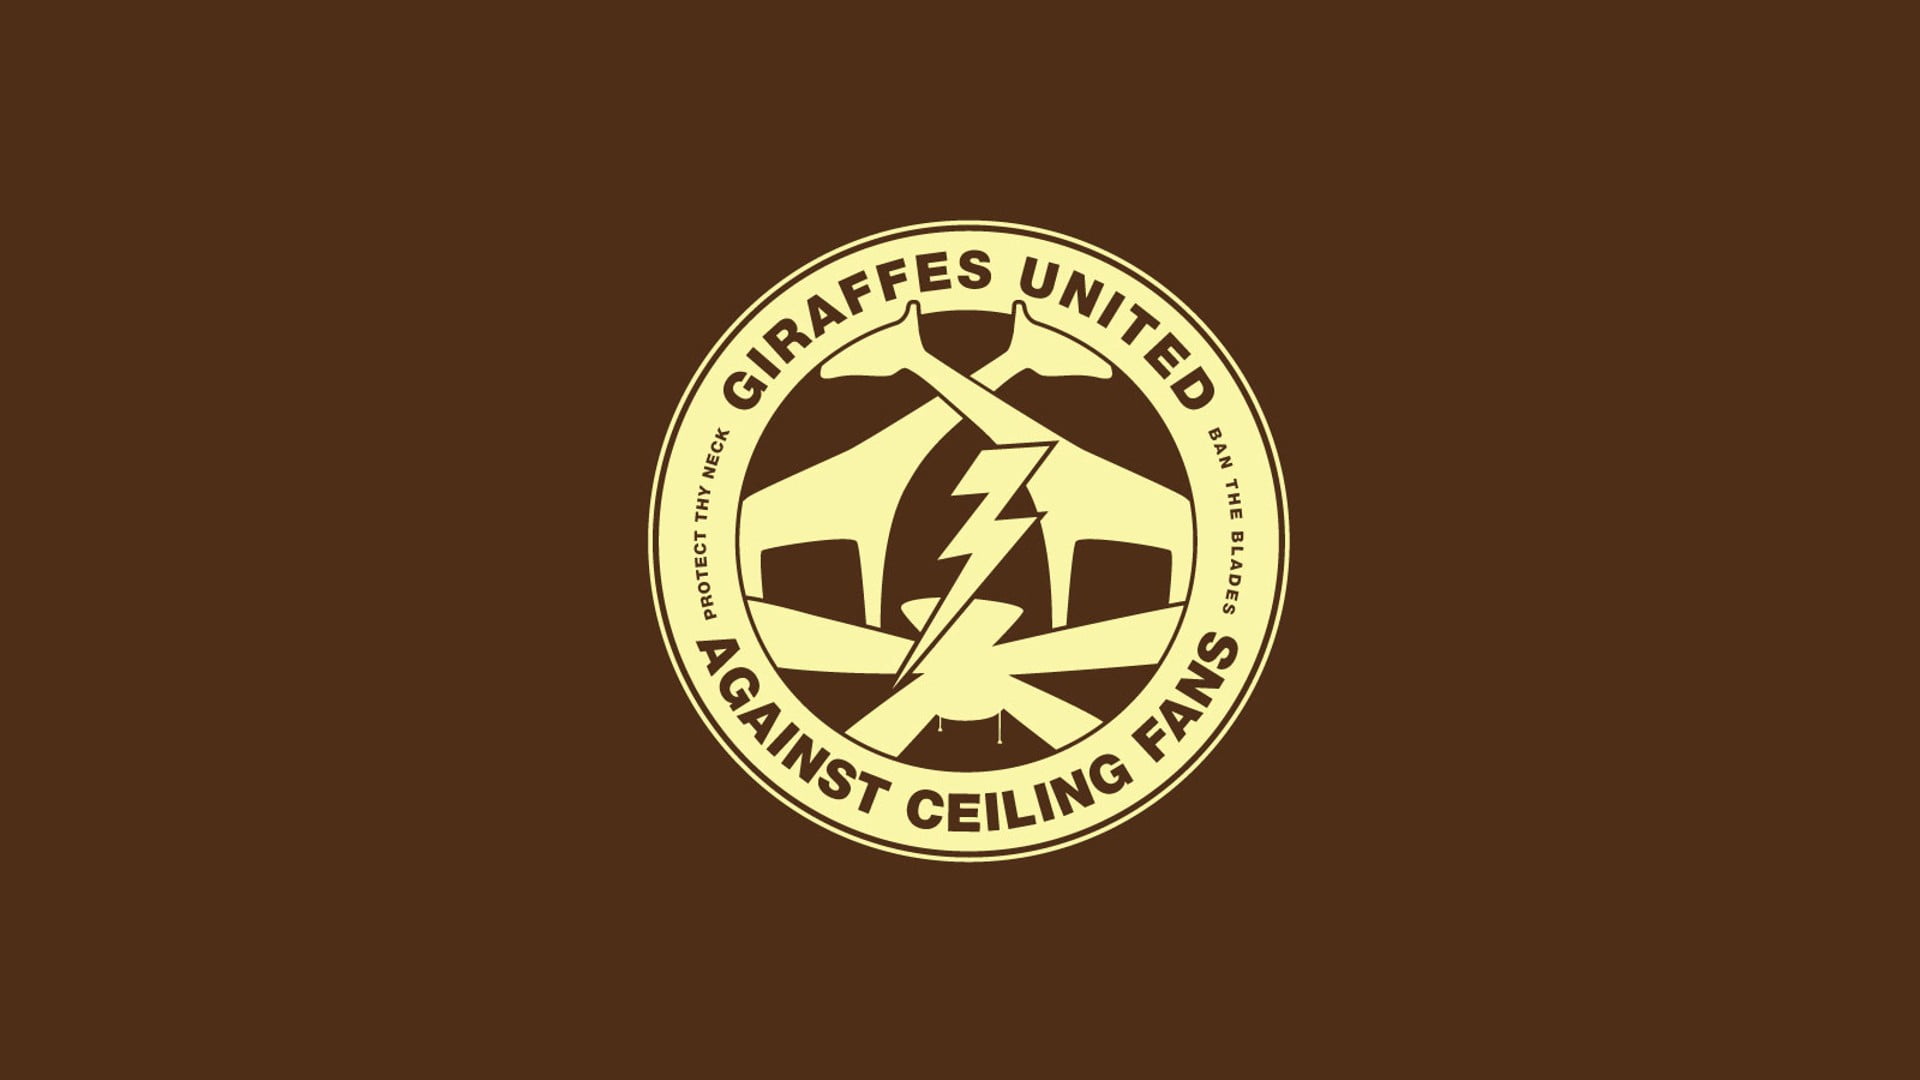 Giraffes United Against Ceiling Fans logo, humor, simple, simple background, brown